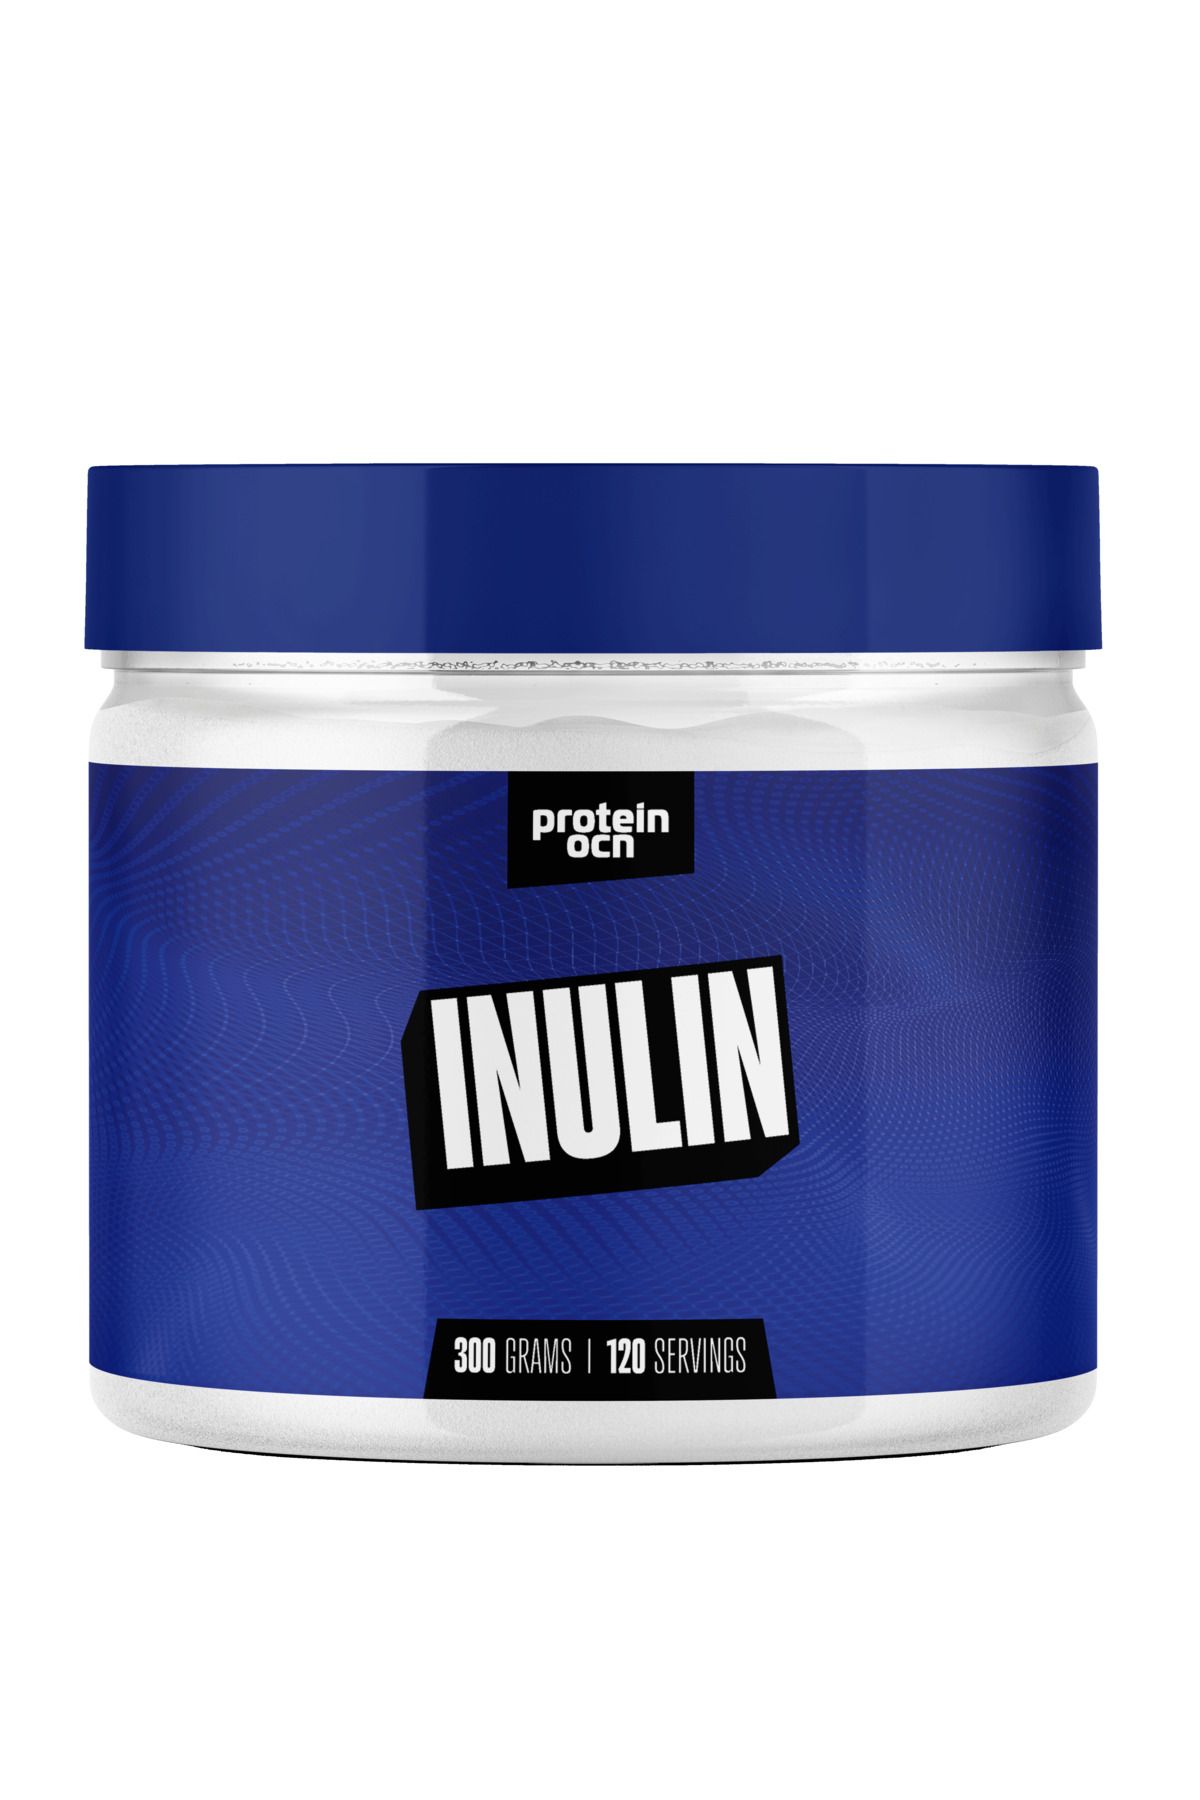 Proteinocean Inulin - 300g - 120 Servis